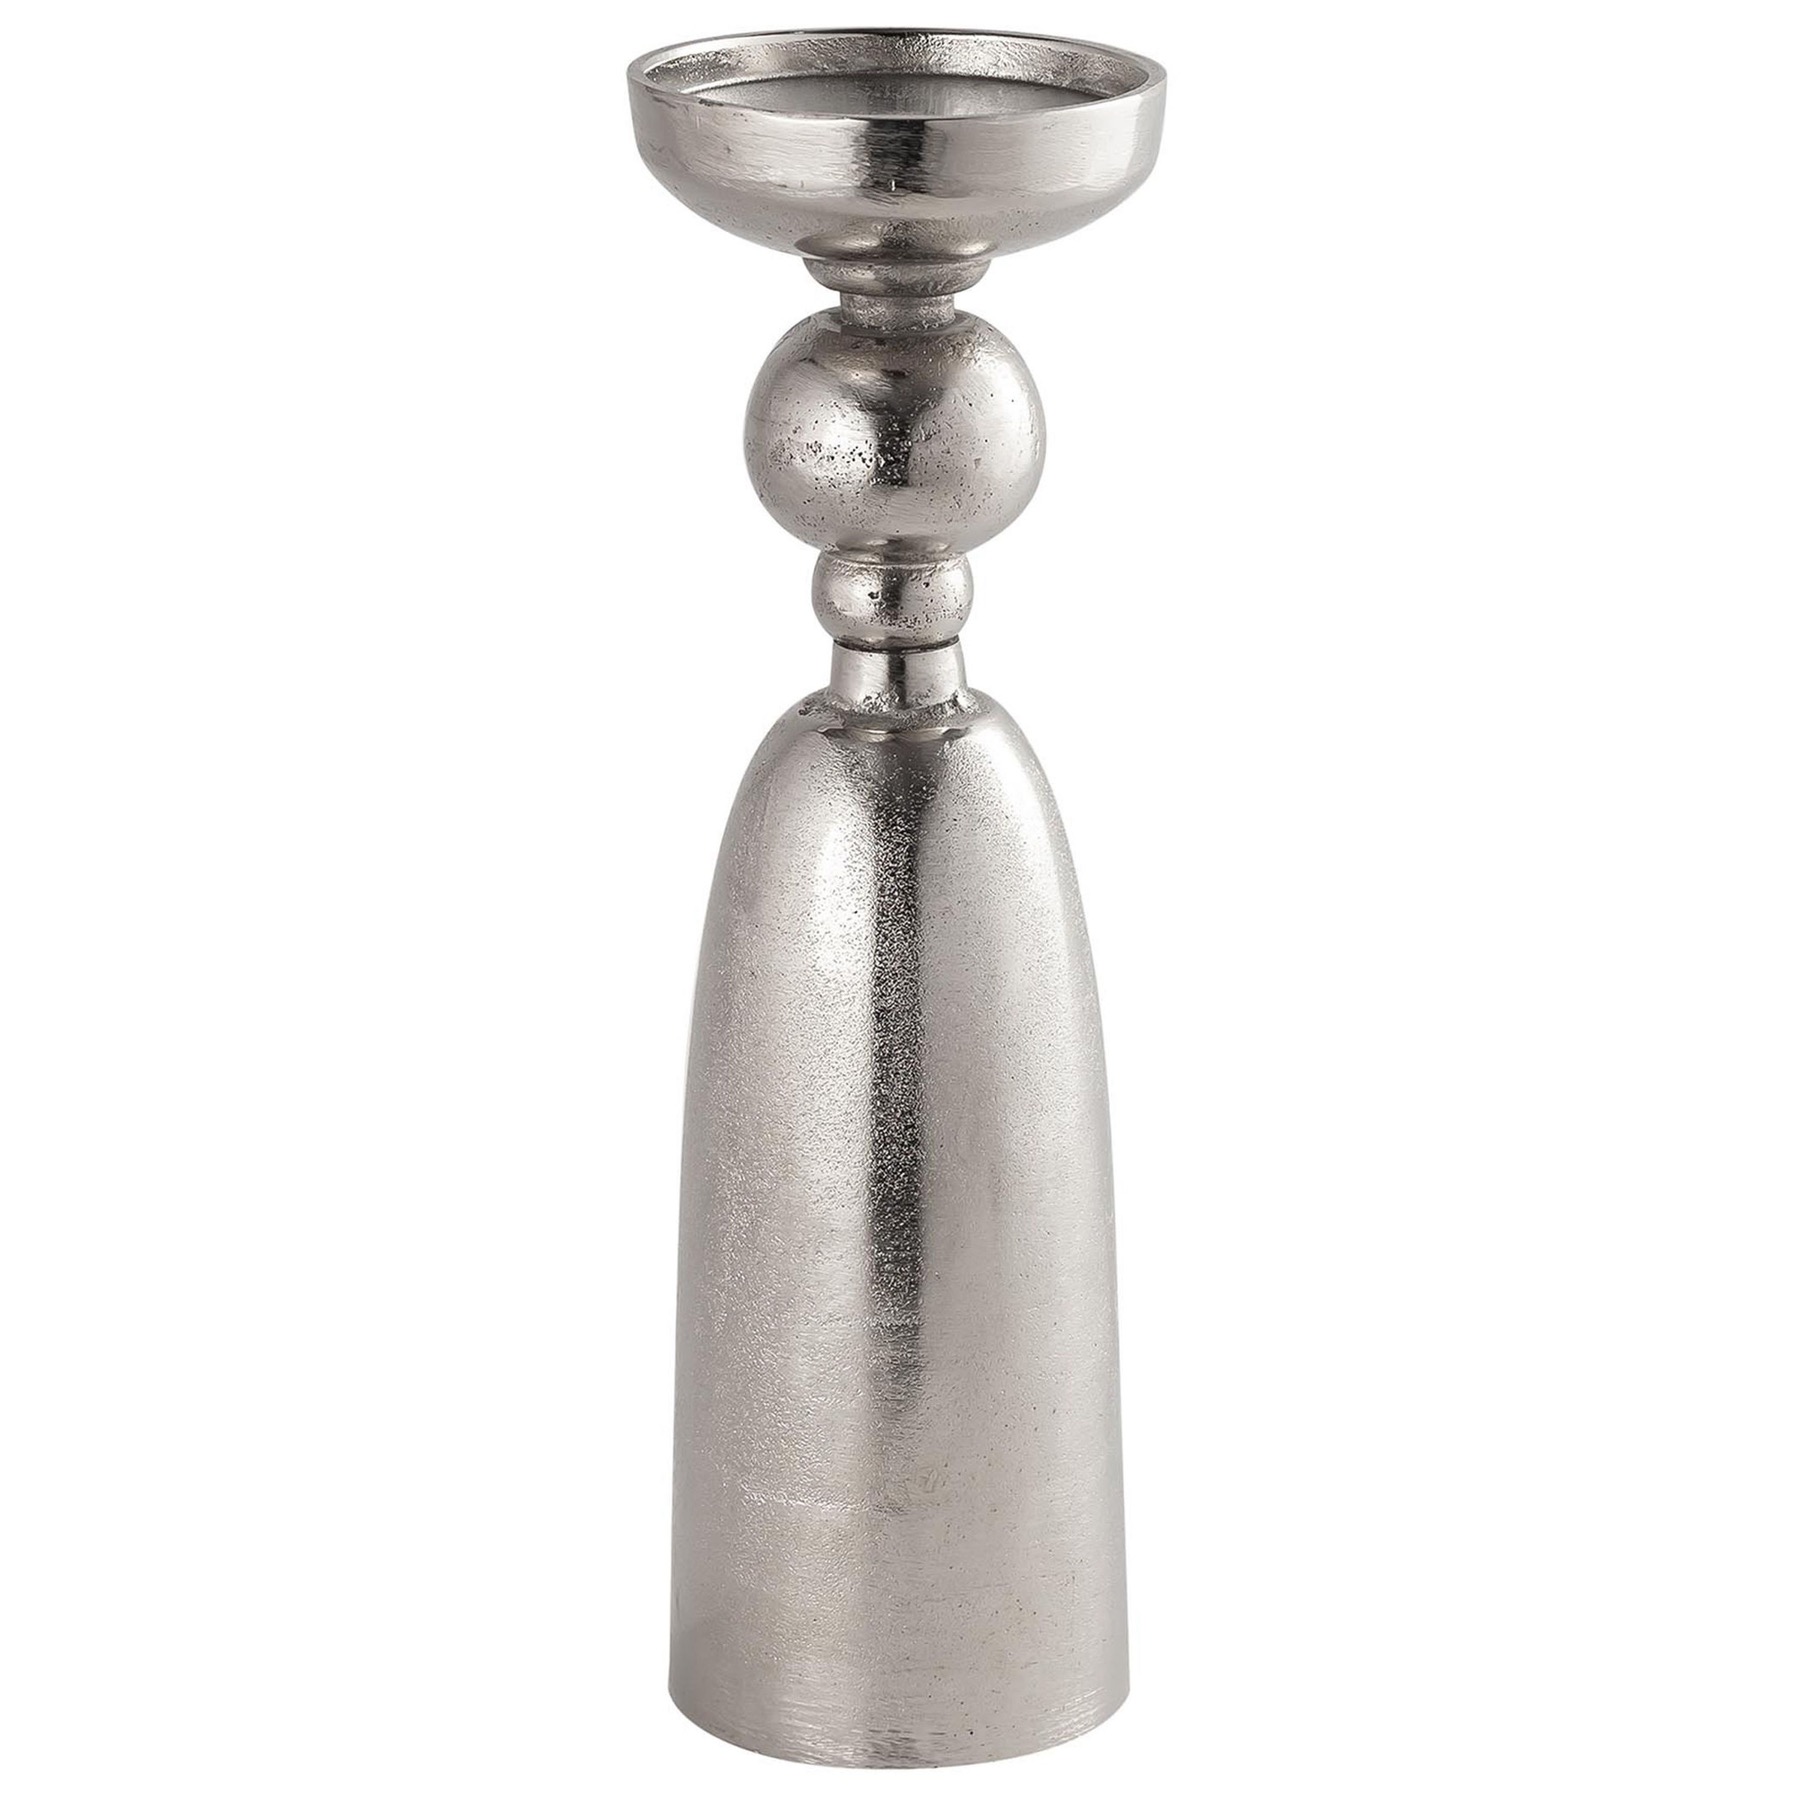 Farrah Collection Silver Extra Large Pillar Candle Holder - Image 1